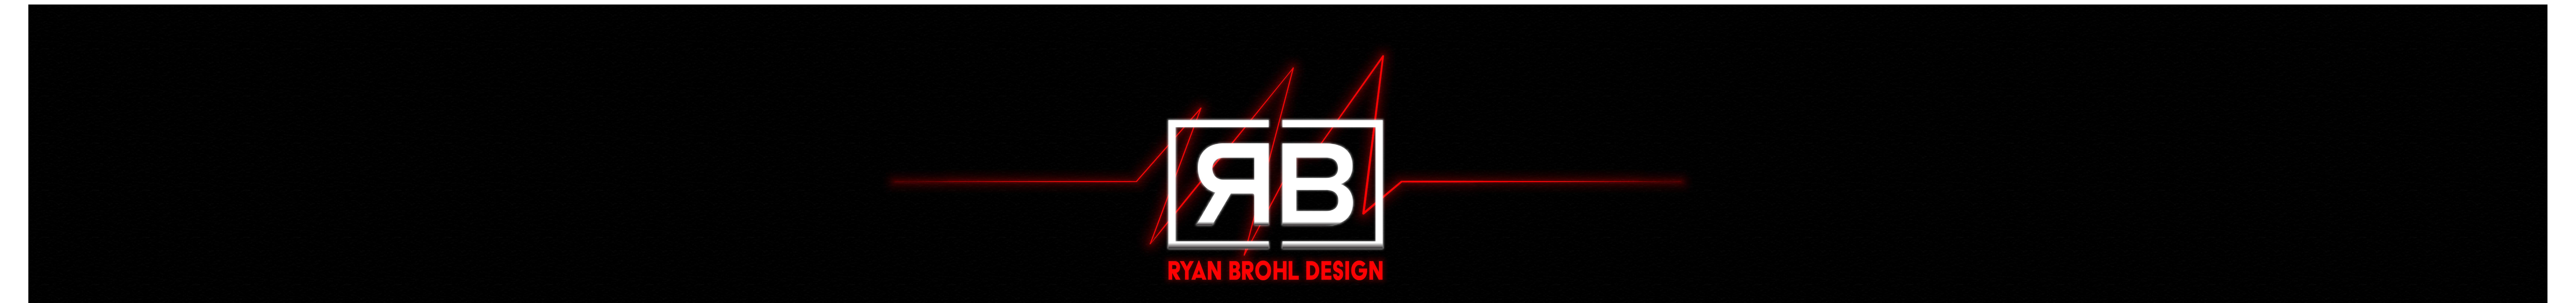 Ryan Brohl's profile banner